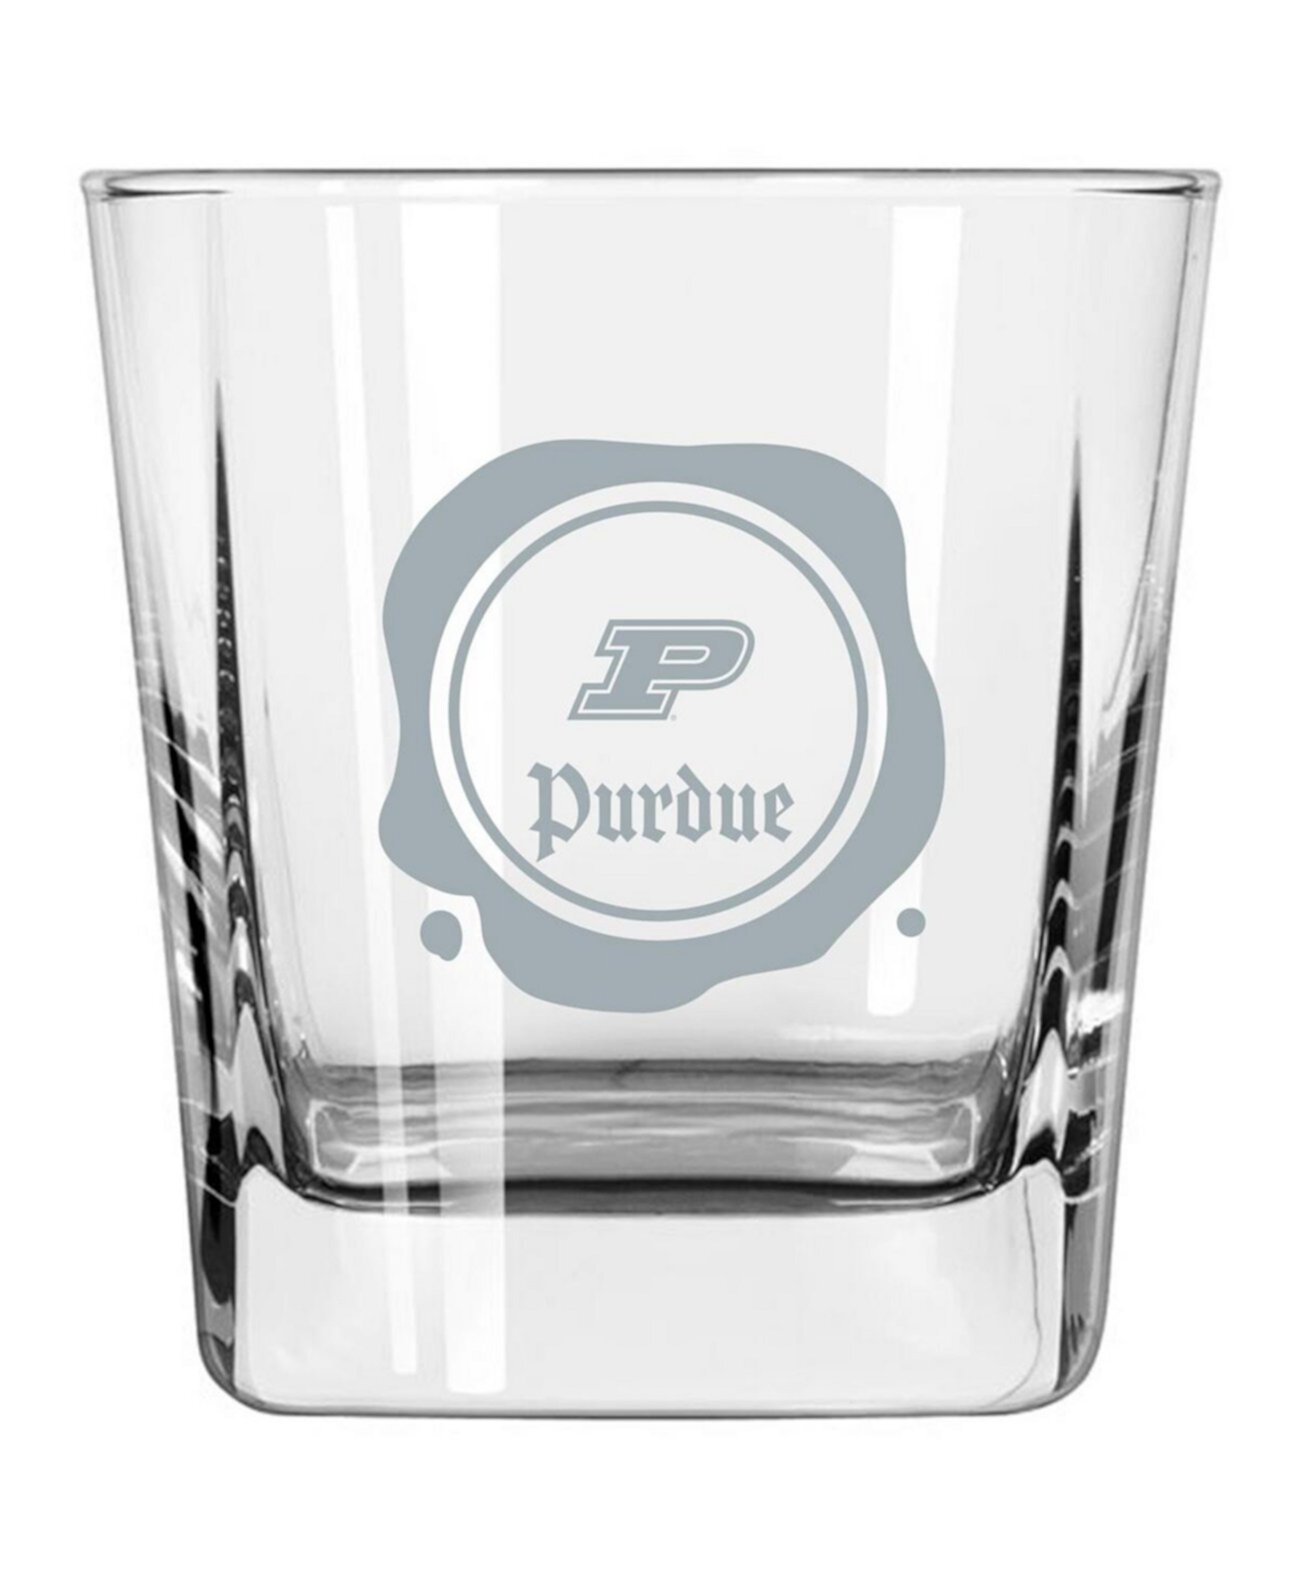 Purdue Boilermakers, старомодное стекло с морозной печатью, 14 унций Logo Brand